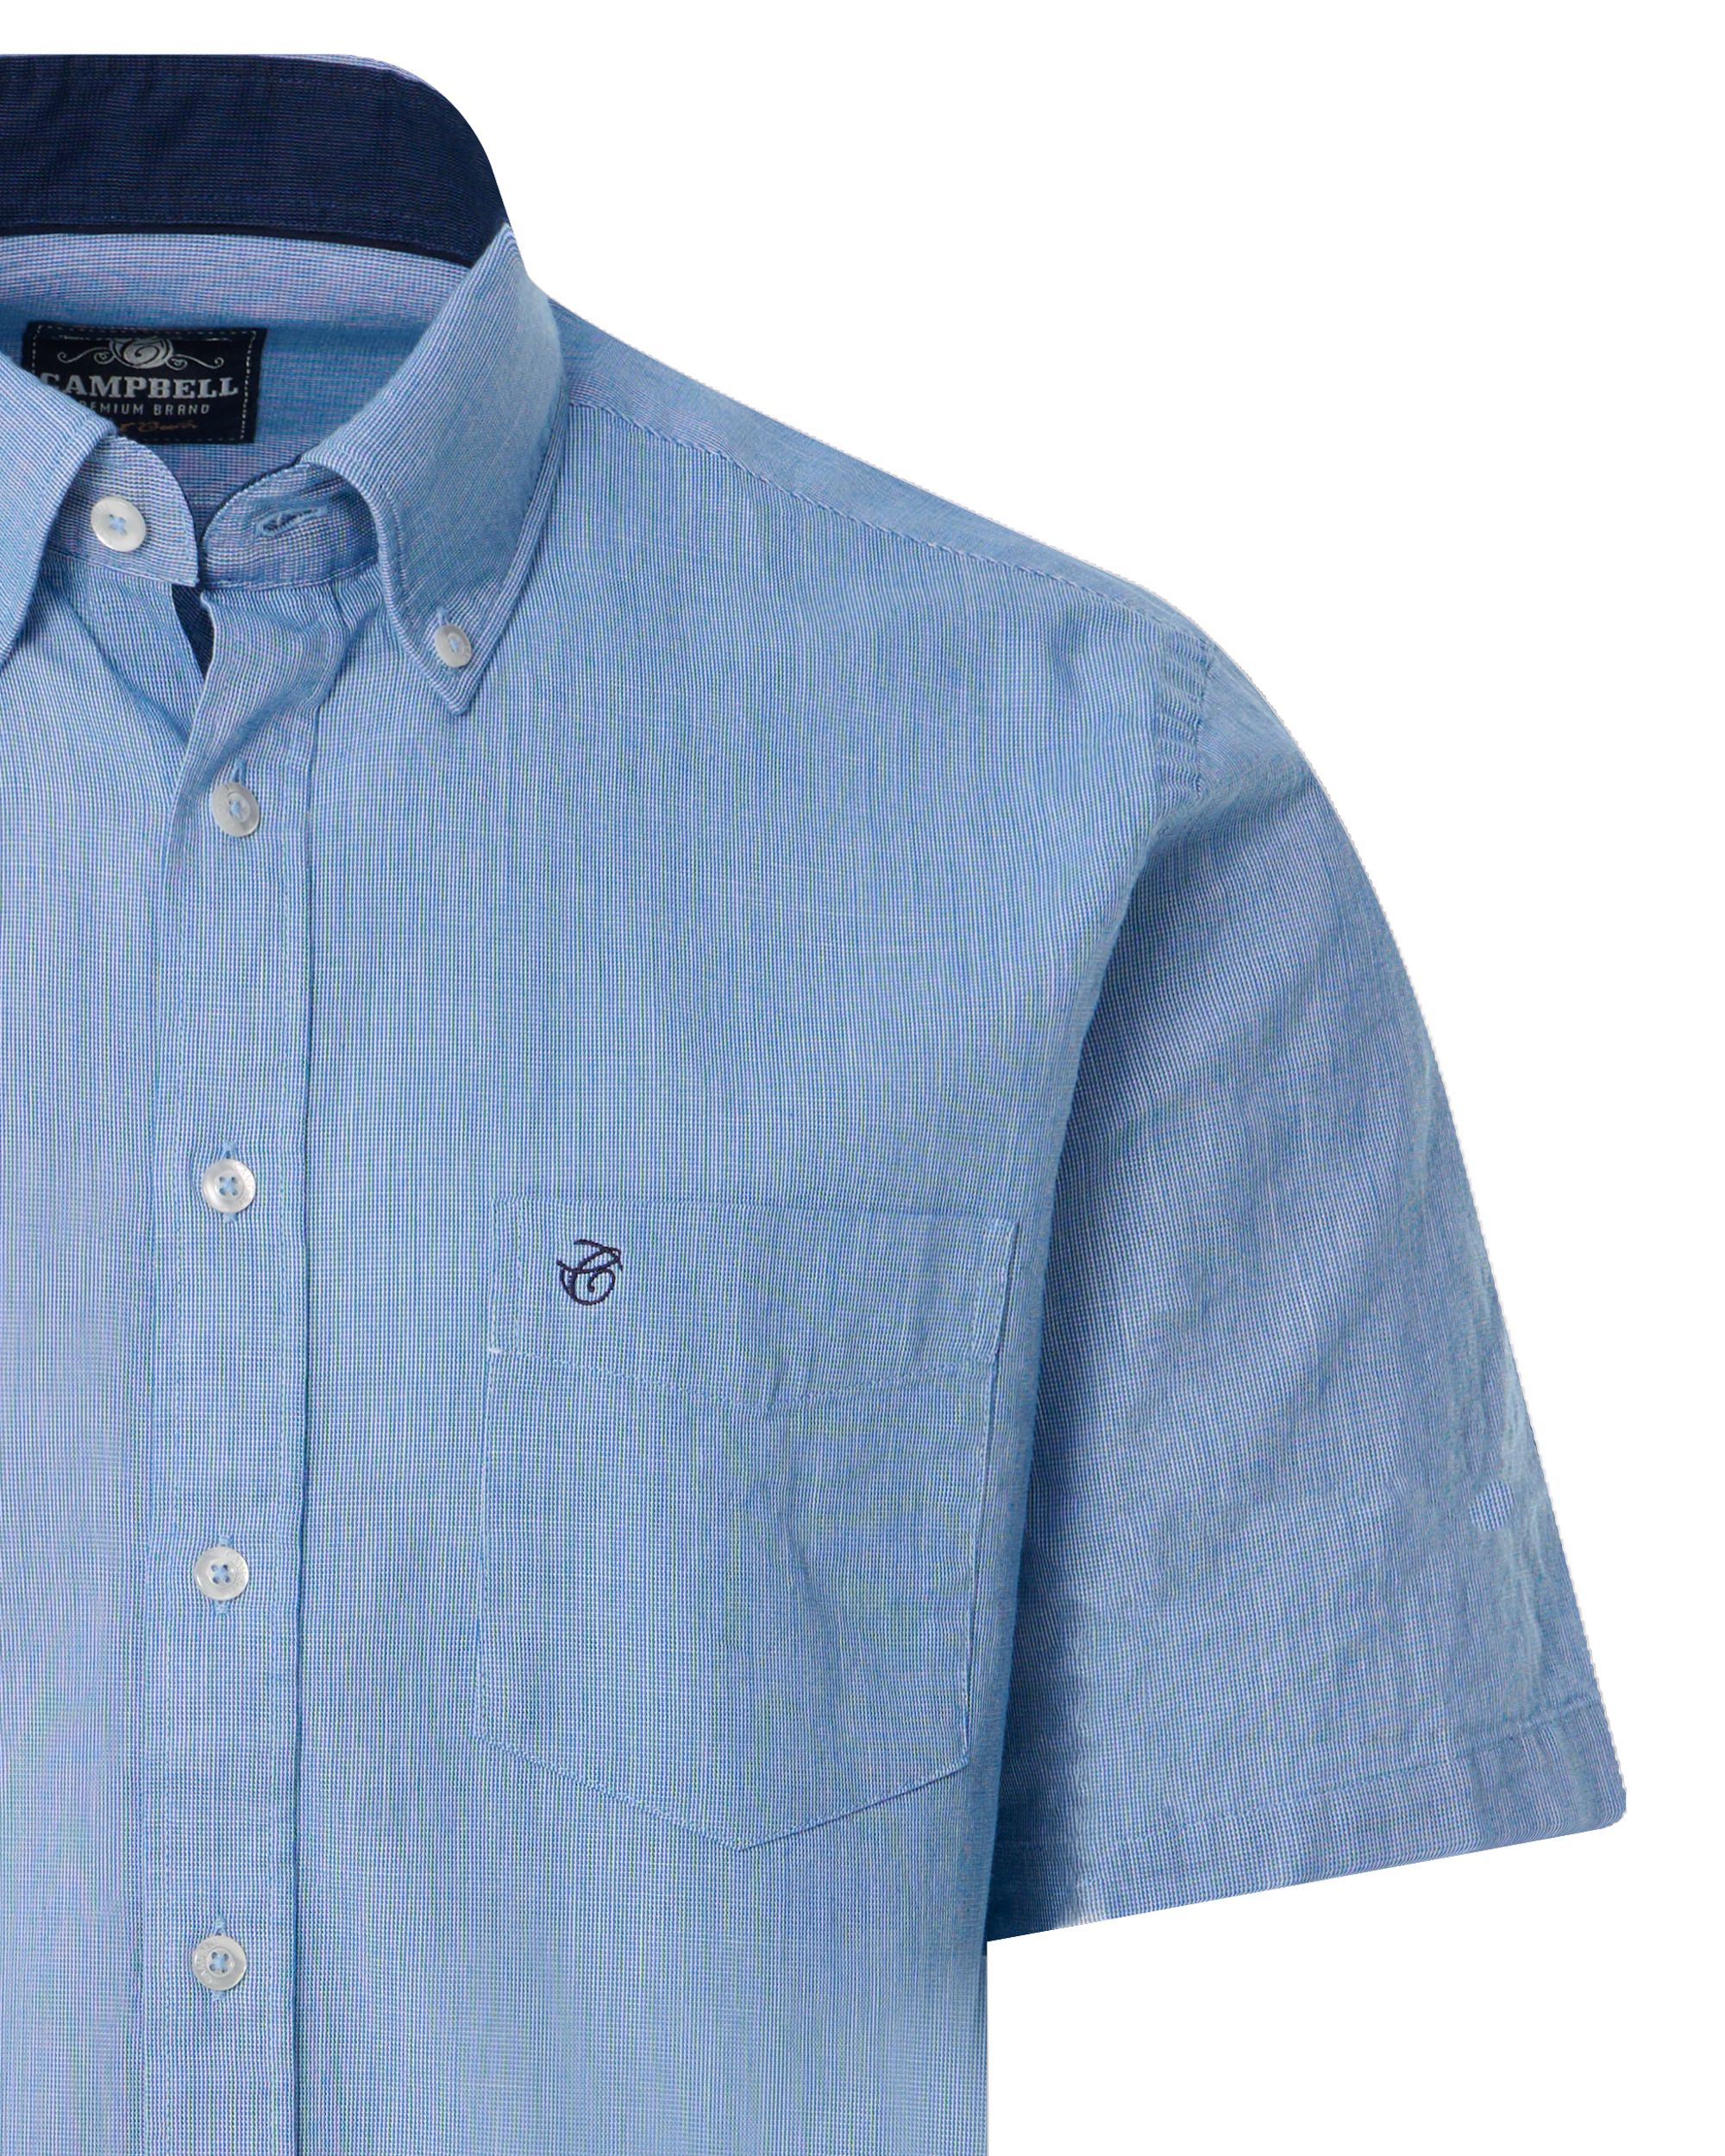 Campbell Classic Casual Overhemd KM Lichtblauw uni 091757-002-L